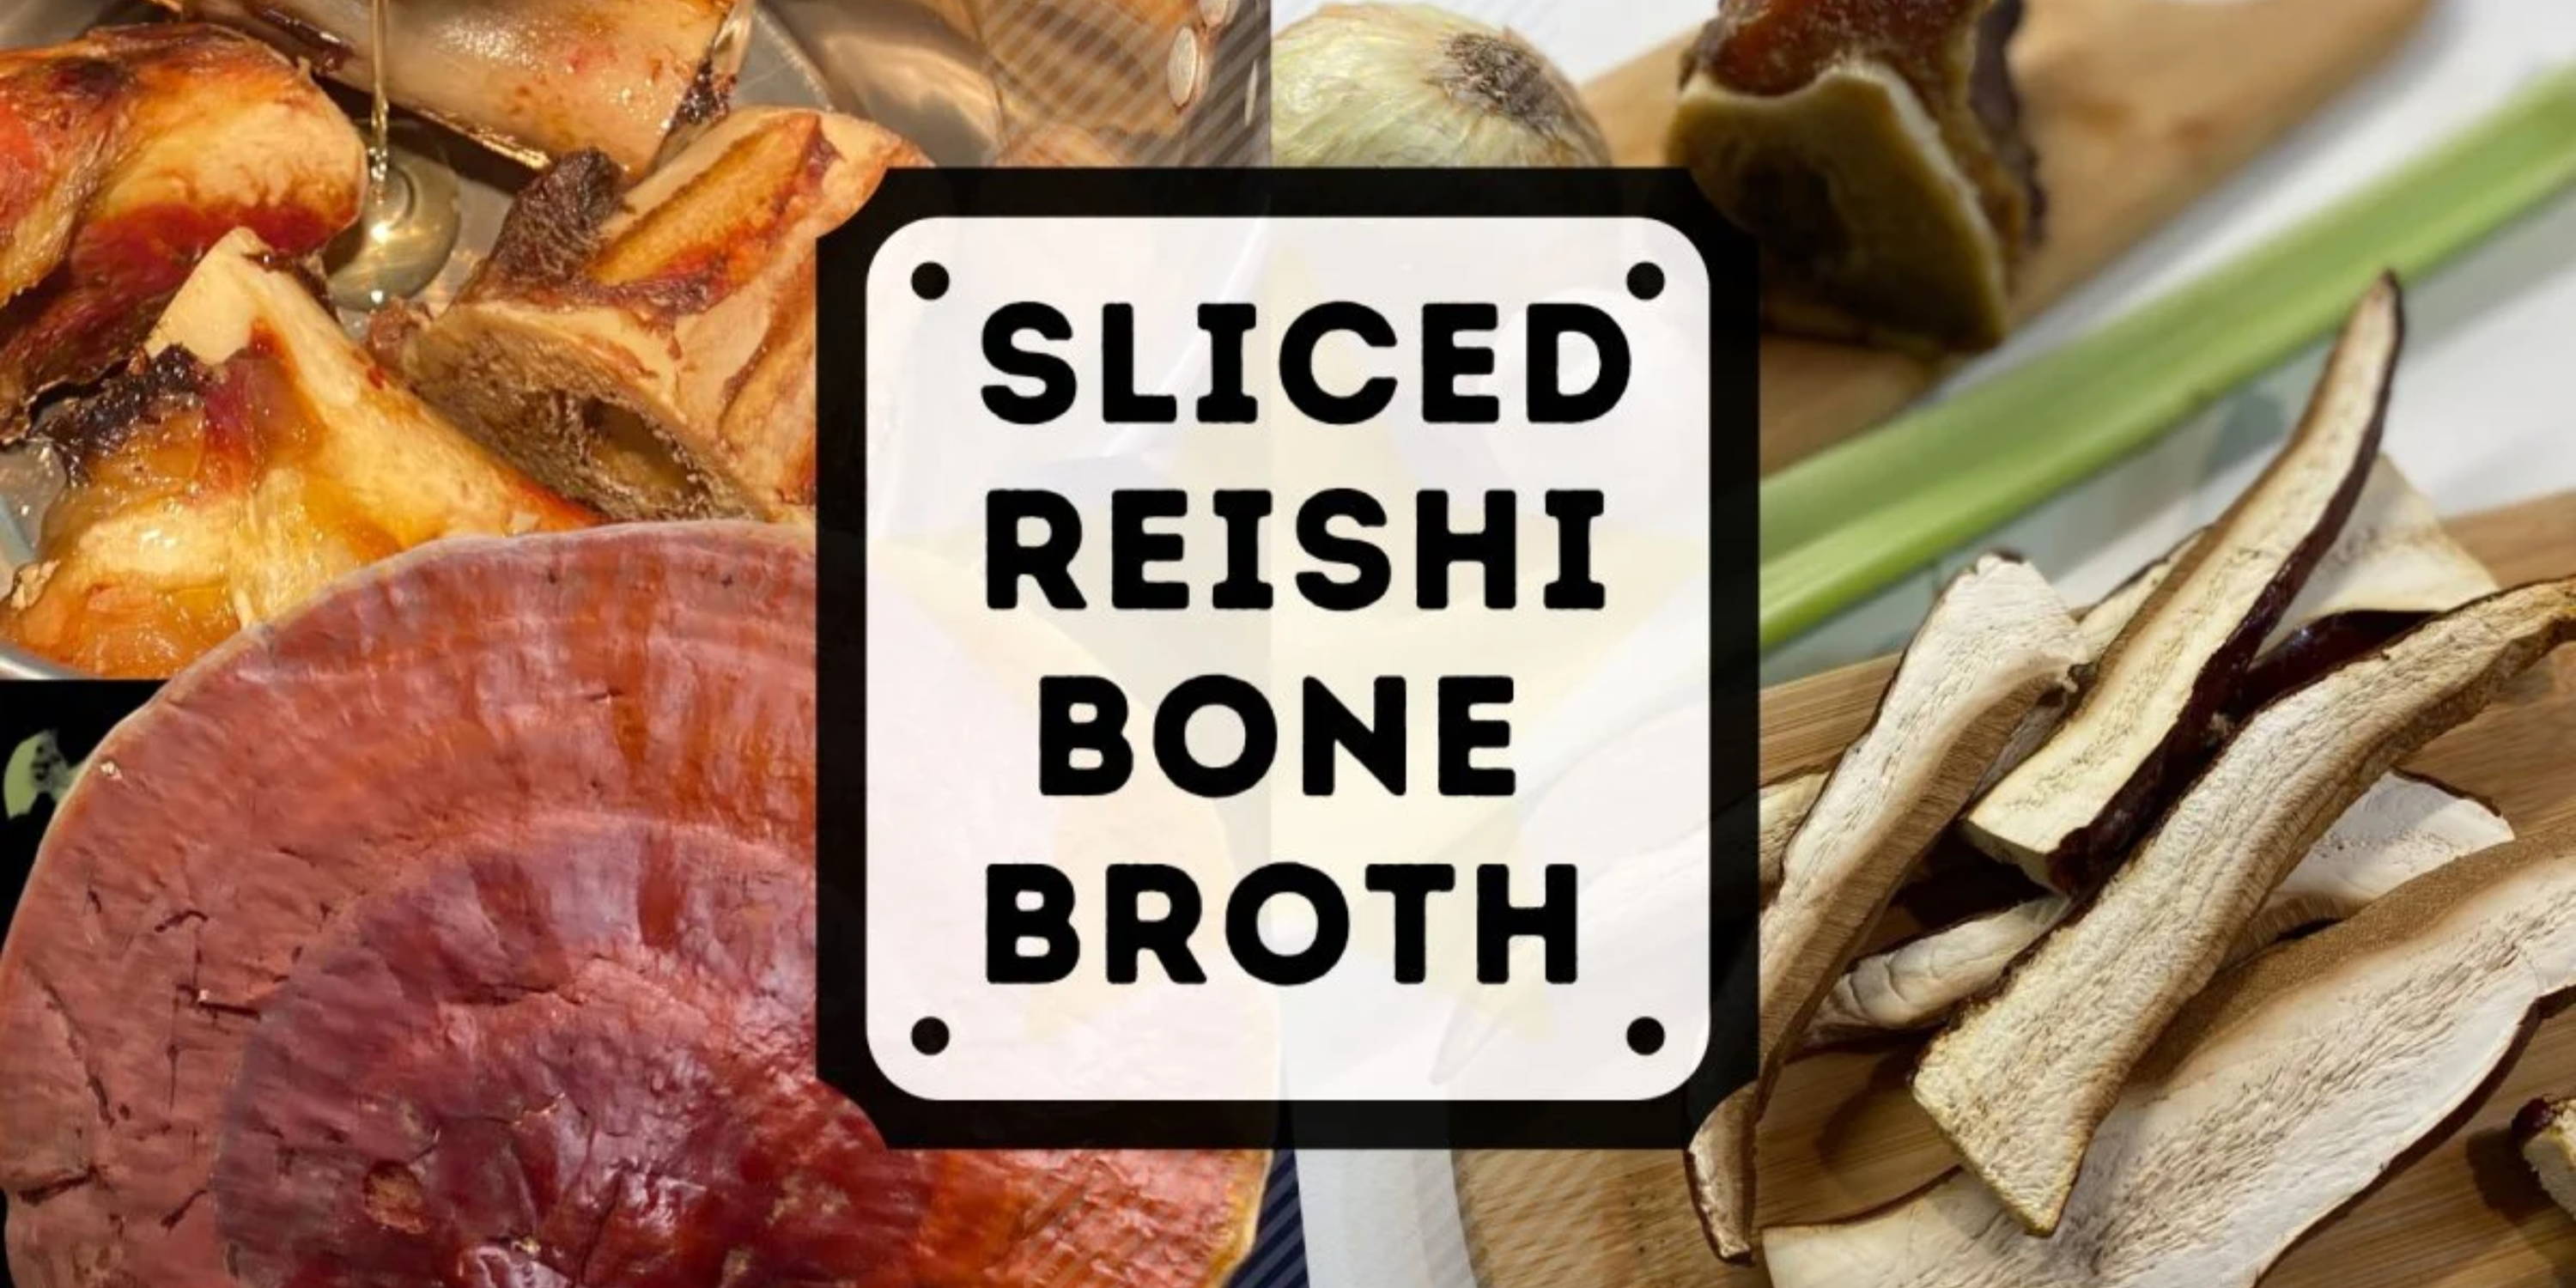 Sliced Reishi Bone Broth next to a Reishi Mushroom and Reishi Slices